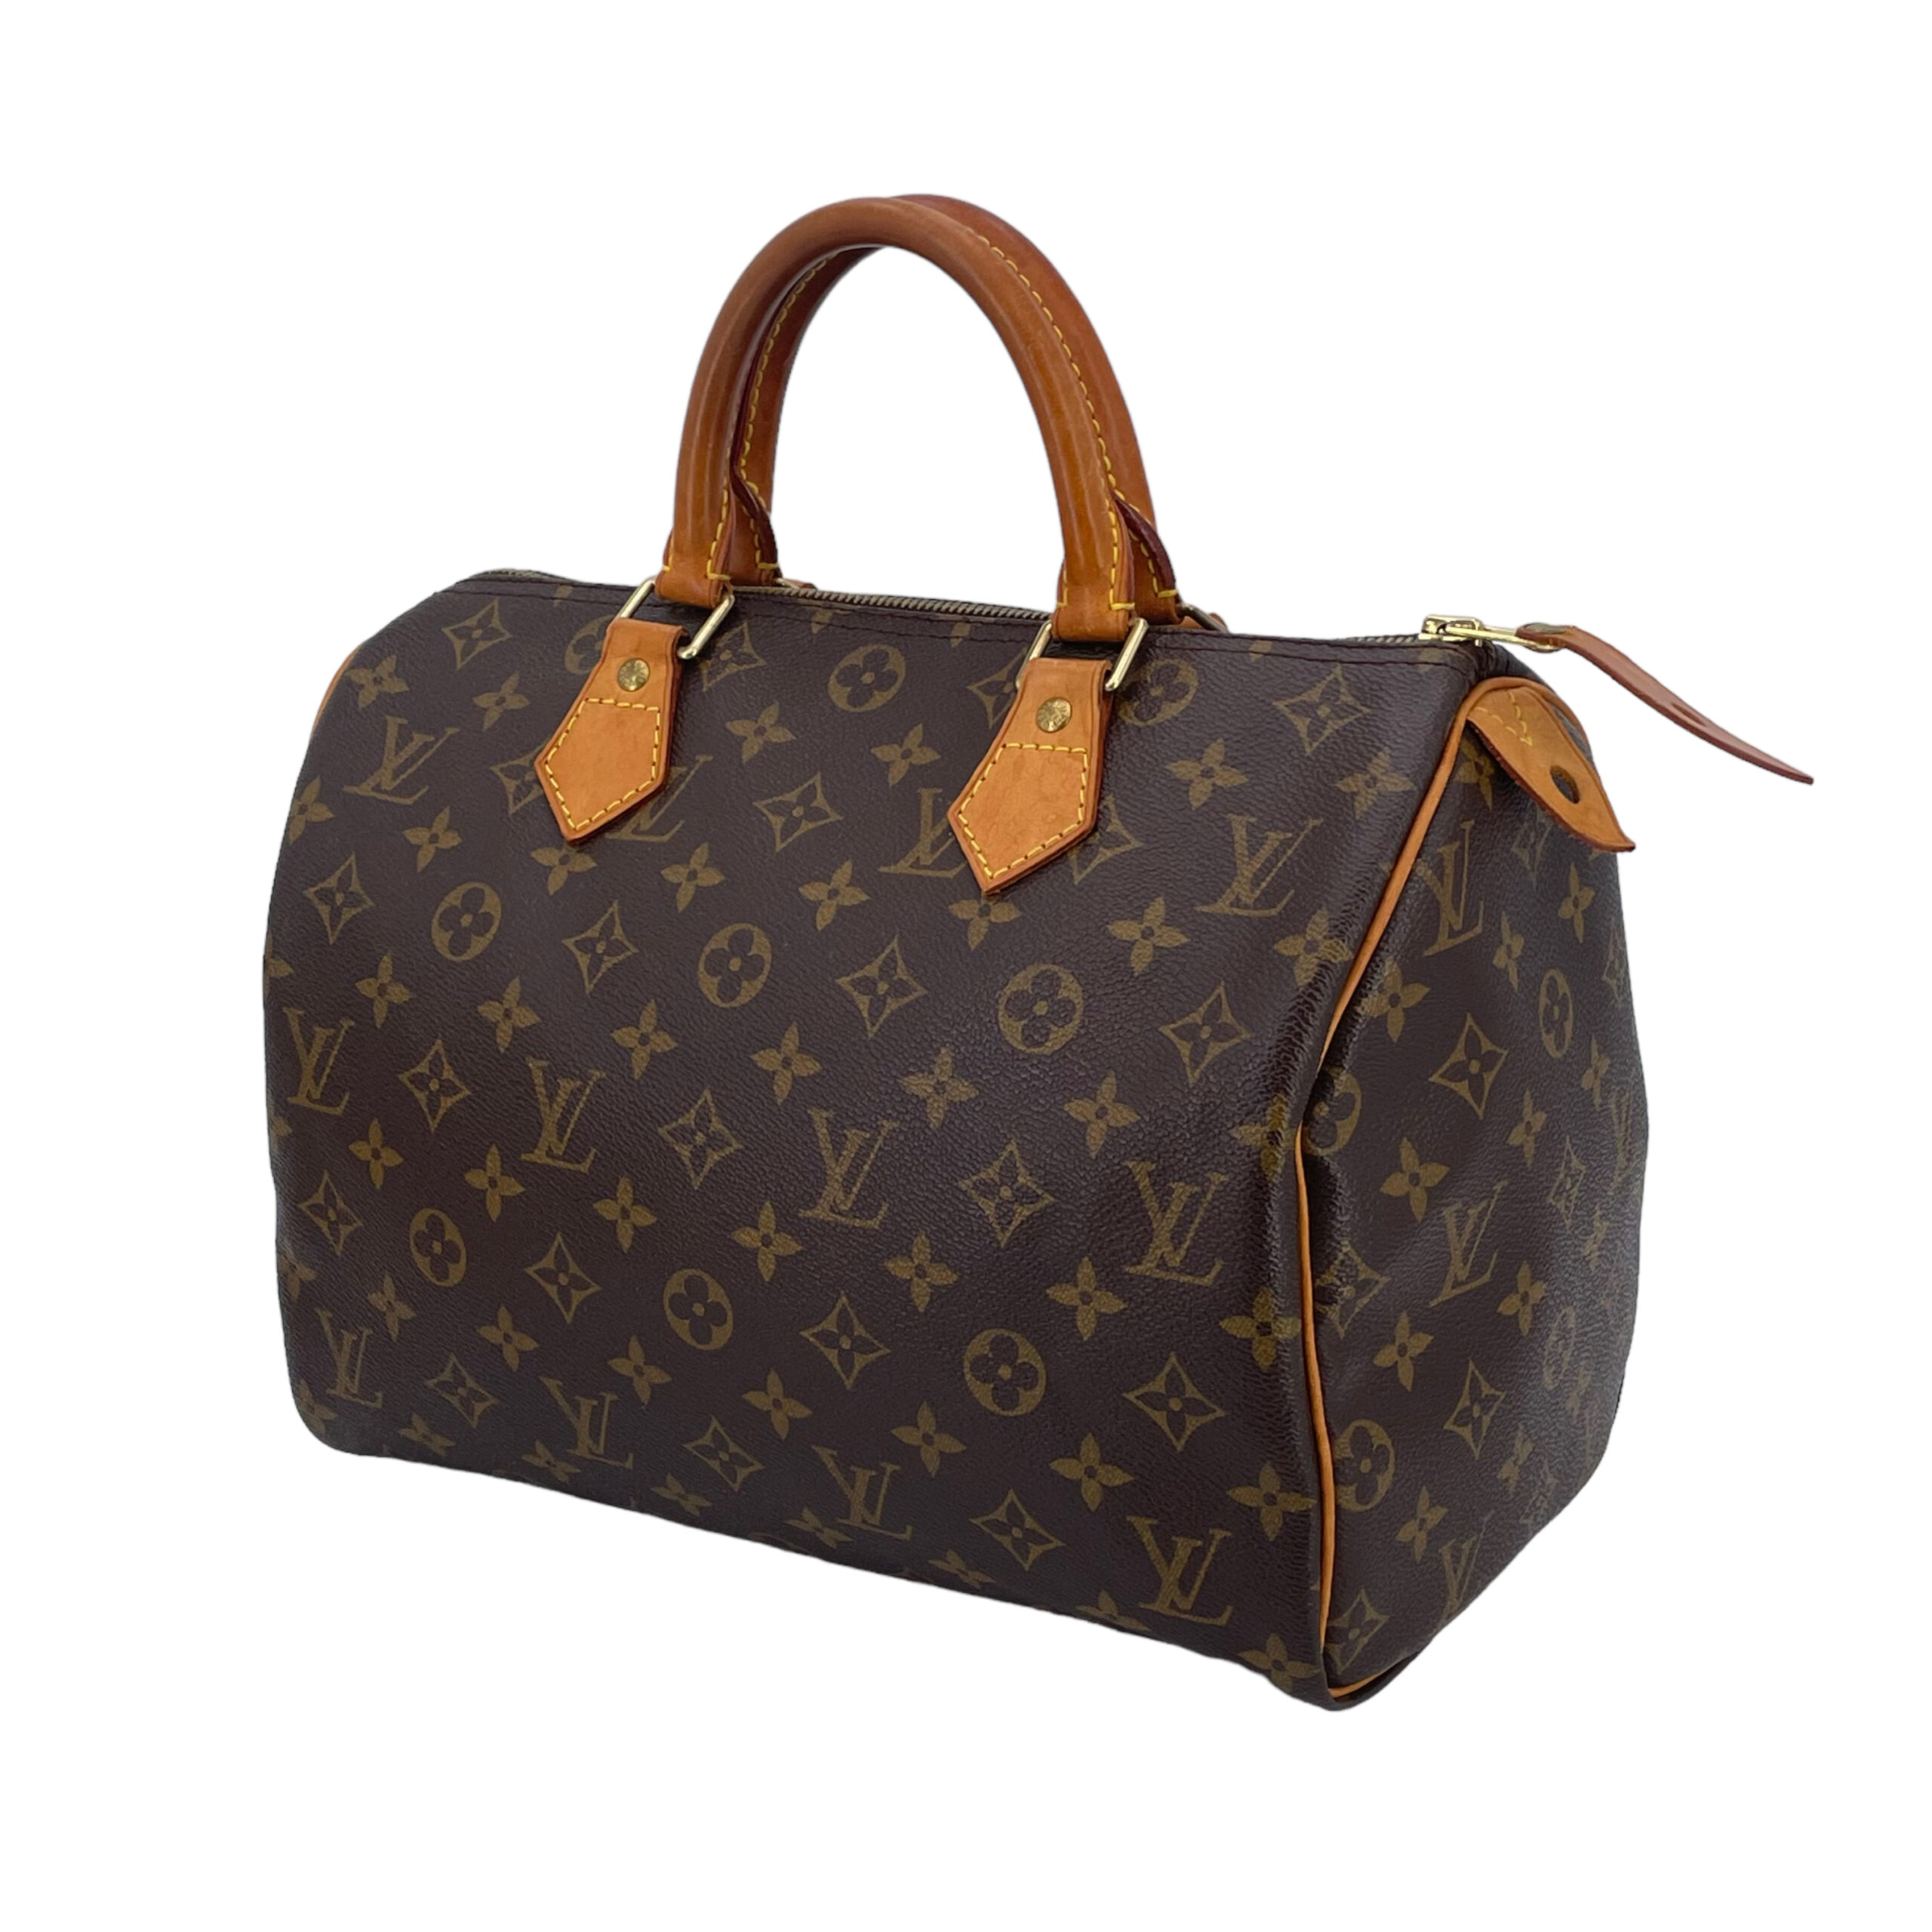 https://ilovehandbags.com/wp-content/uploads/sites/3/Louis-Vuitton-Speedy30-Monogram-komplett-2023-0160-scaled.jpg